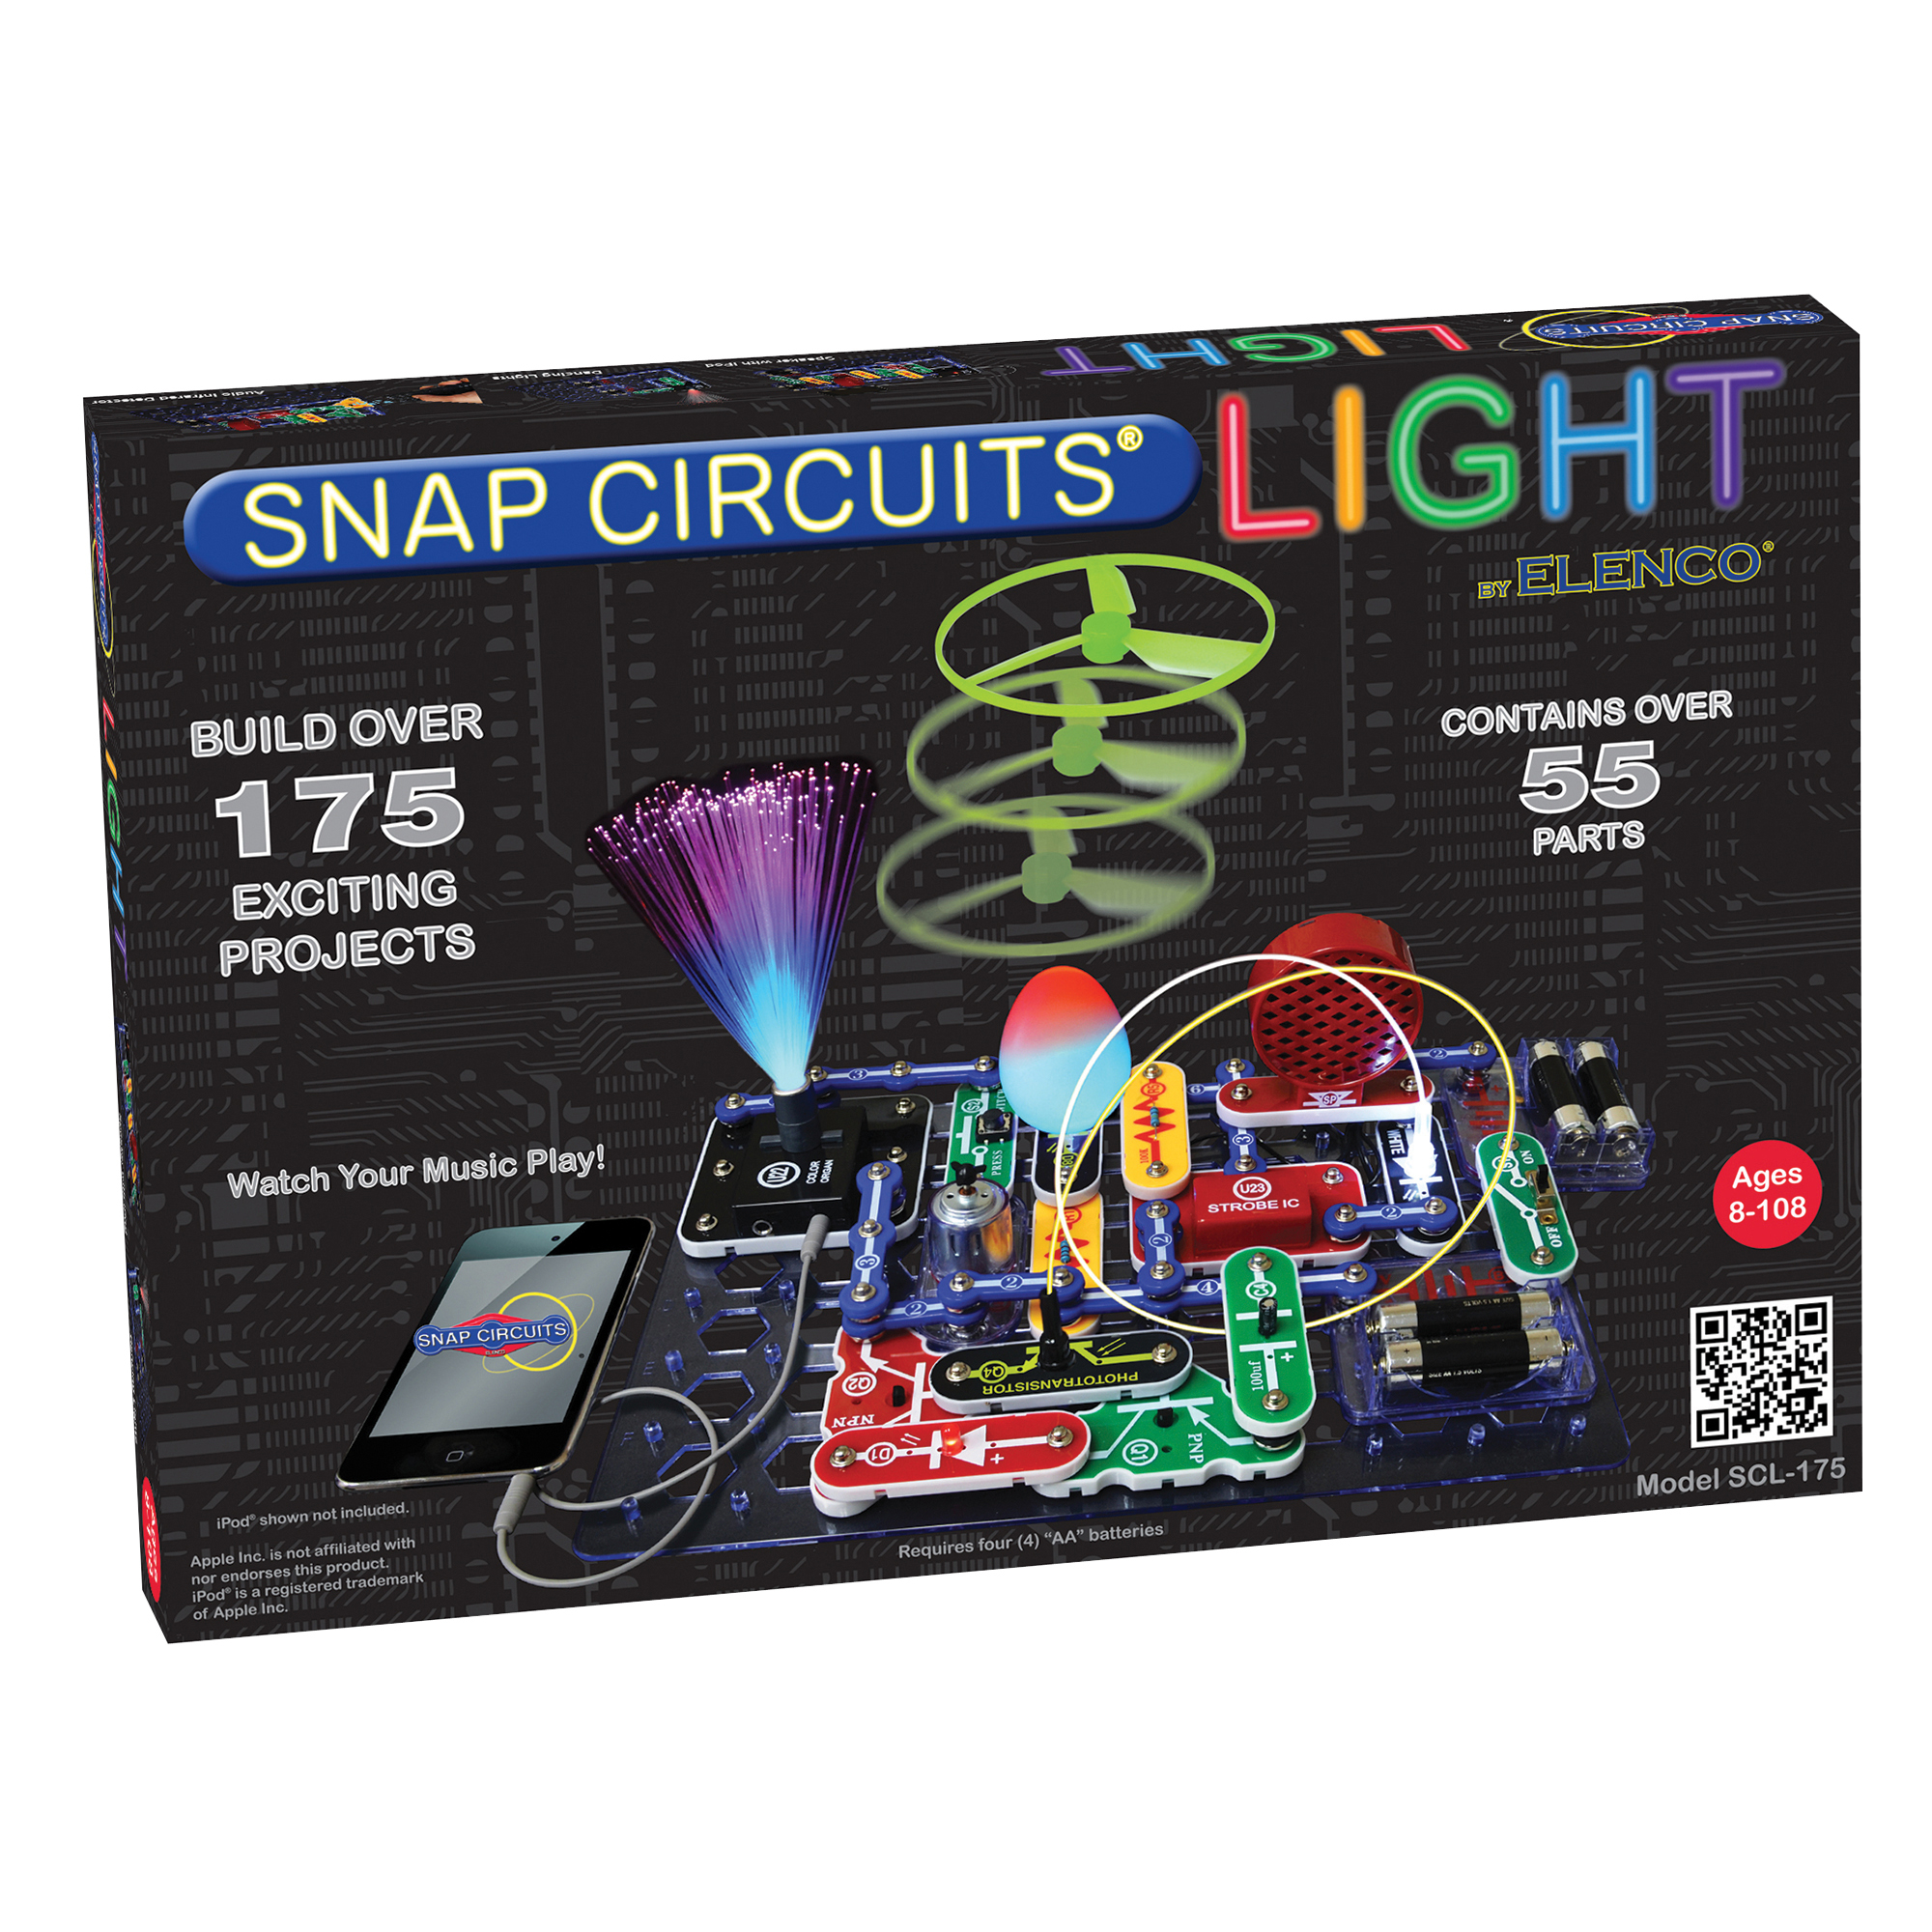 Elenco Snap Circuits LIGHT